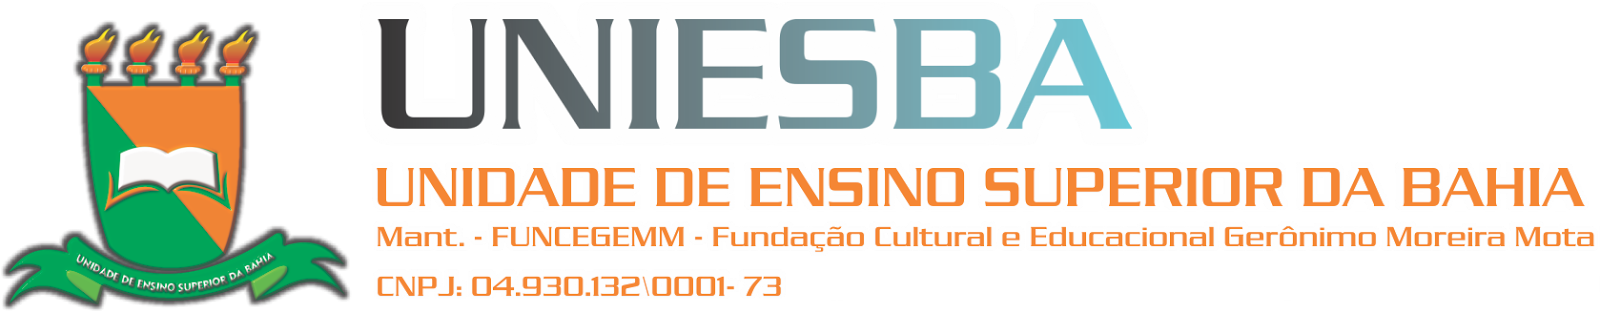 UNIESBA - Unidade de Ensino Superior da Bahia